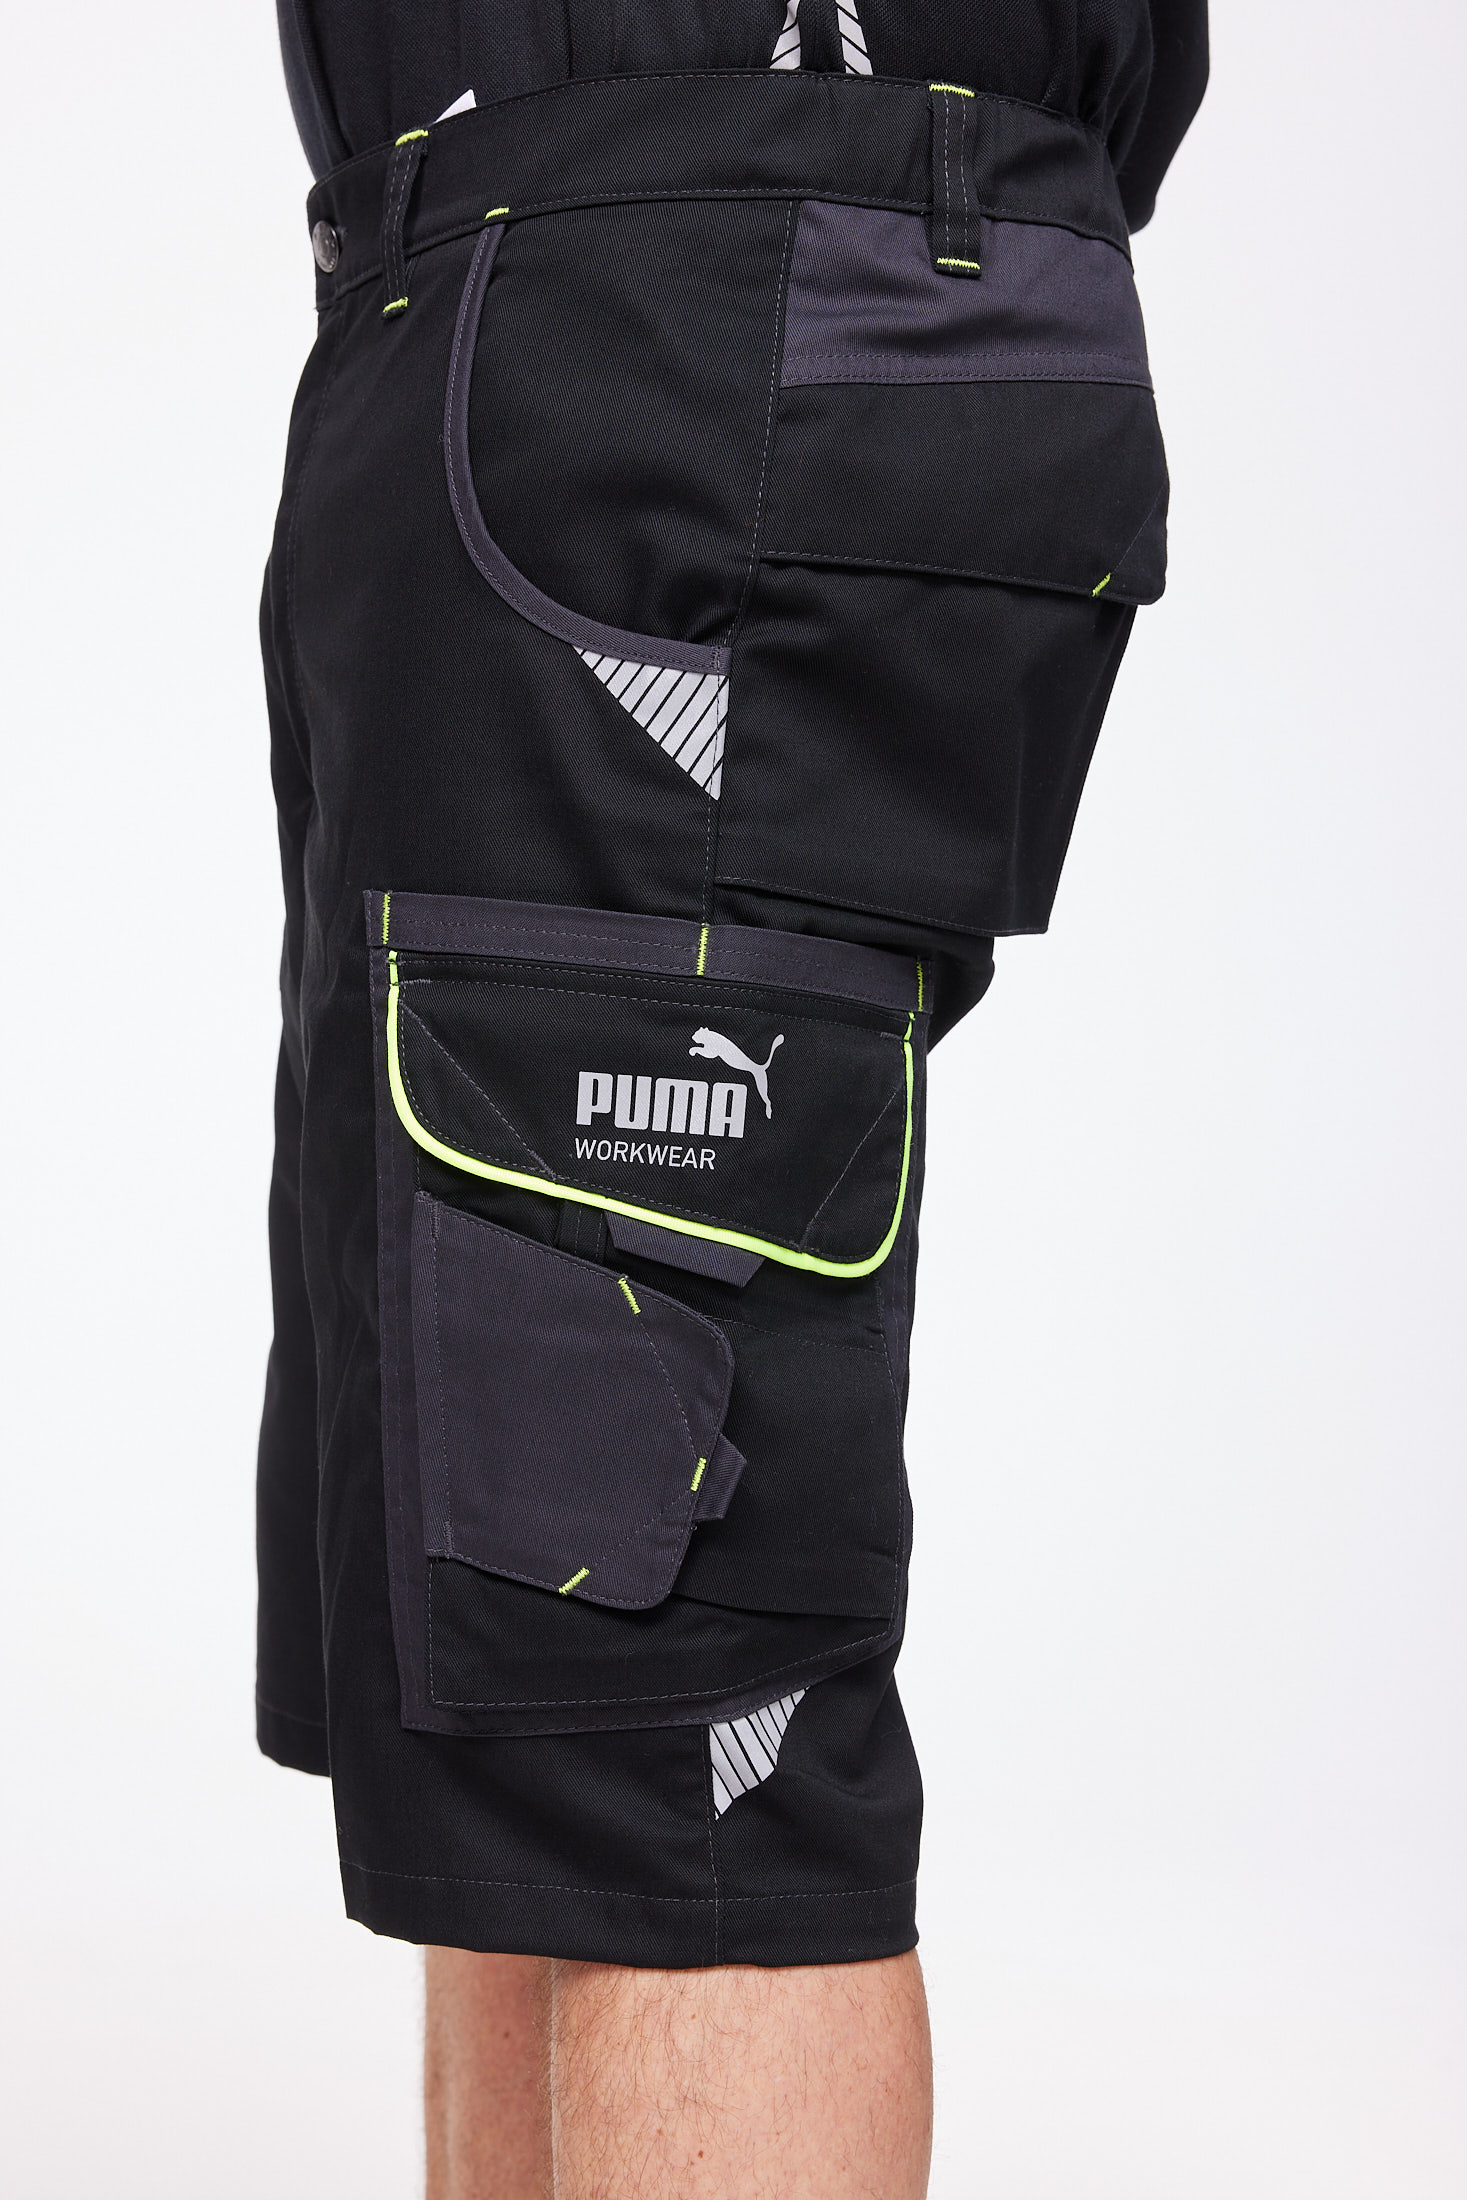 PUMA Workwear Precision X Herren Workwear Puma Shorts 